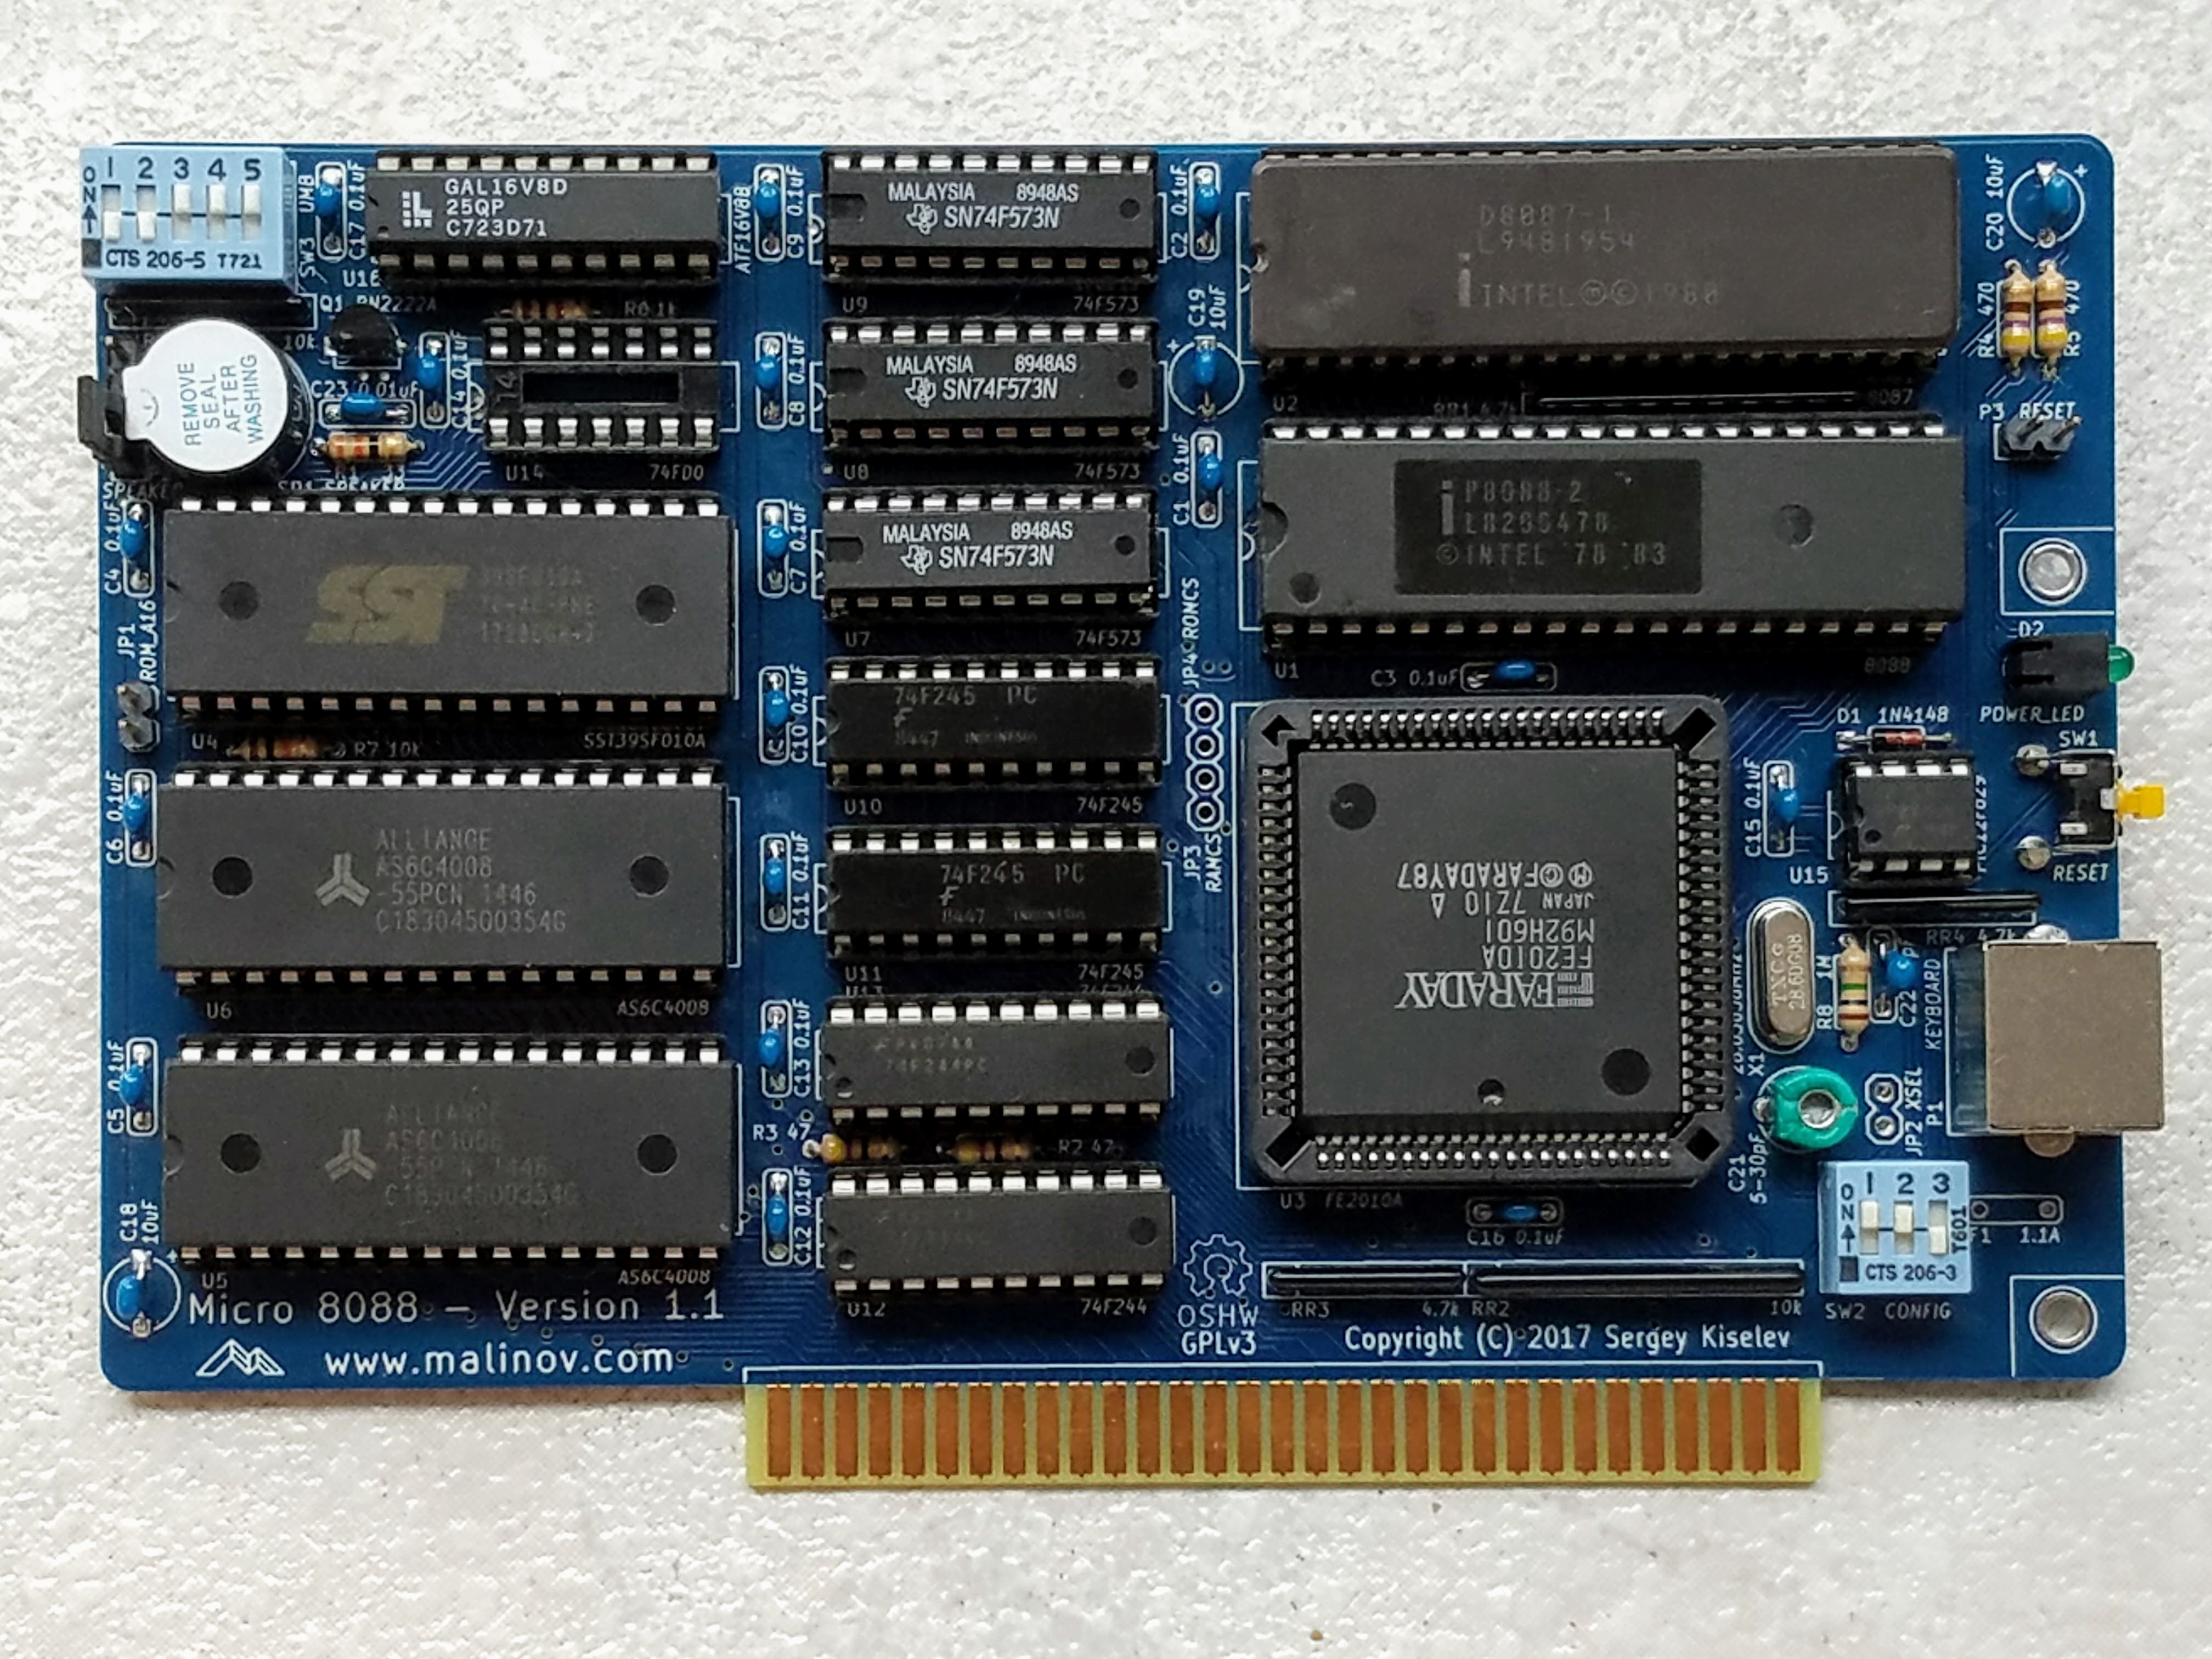 Micro 8088 V1.1 Assembled Board